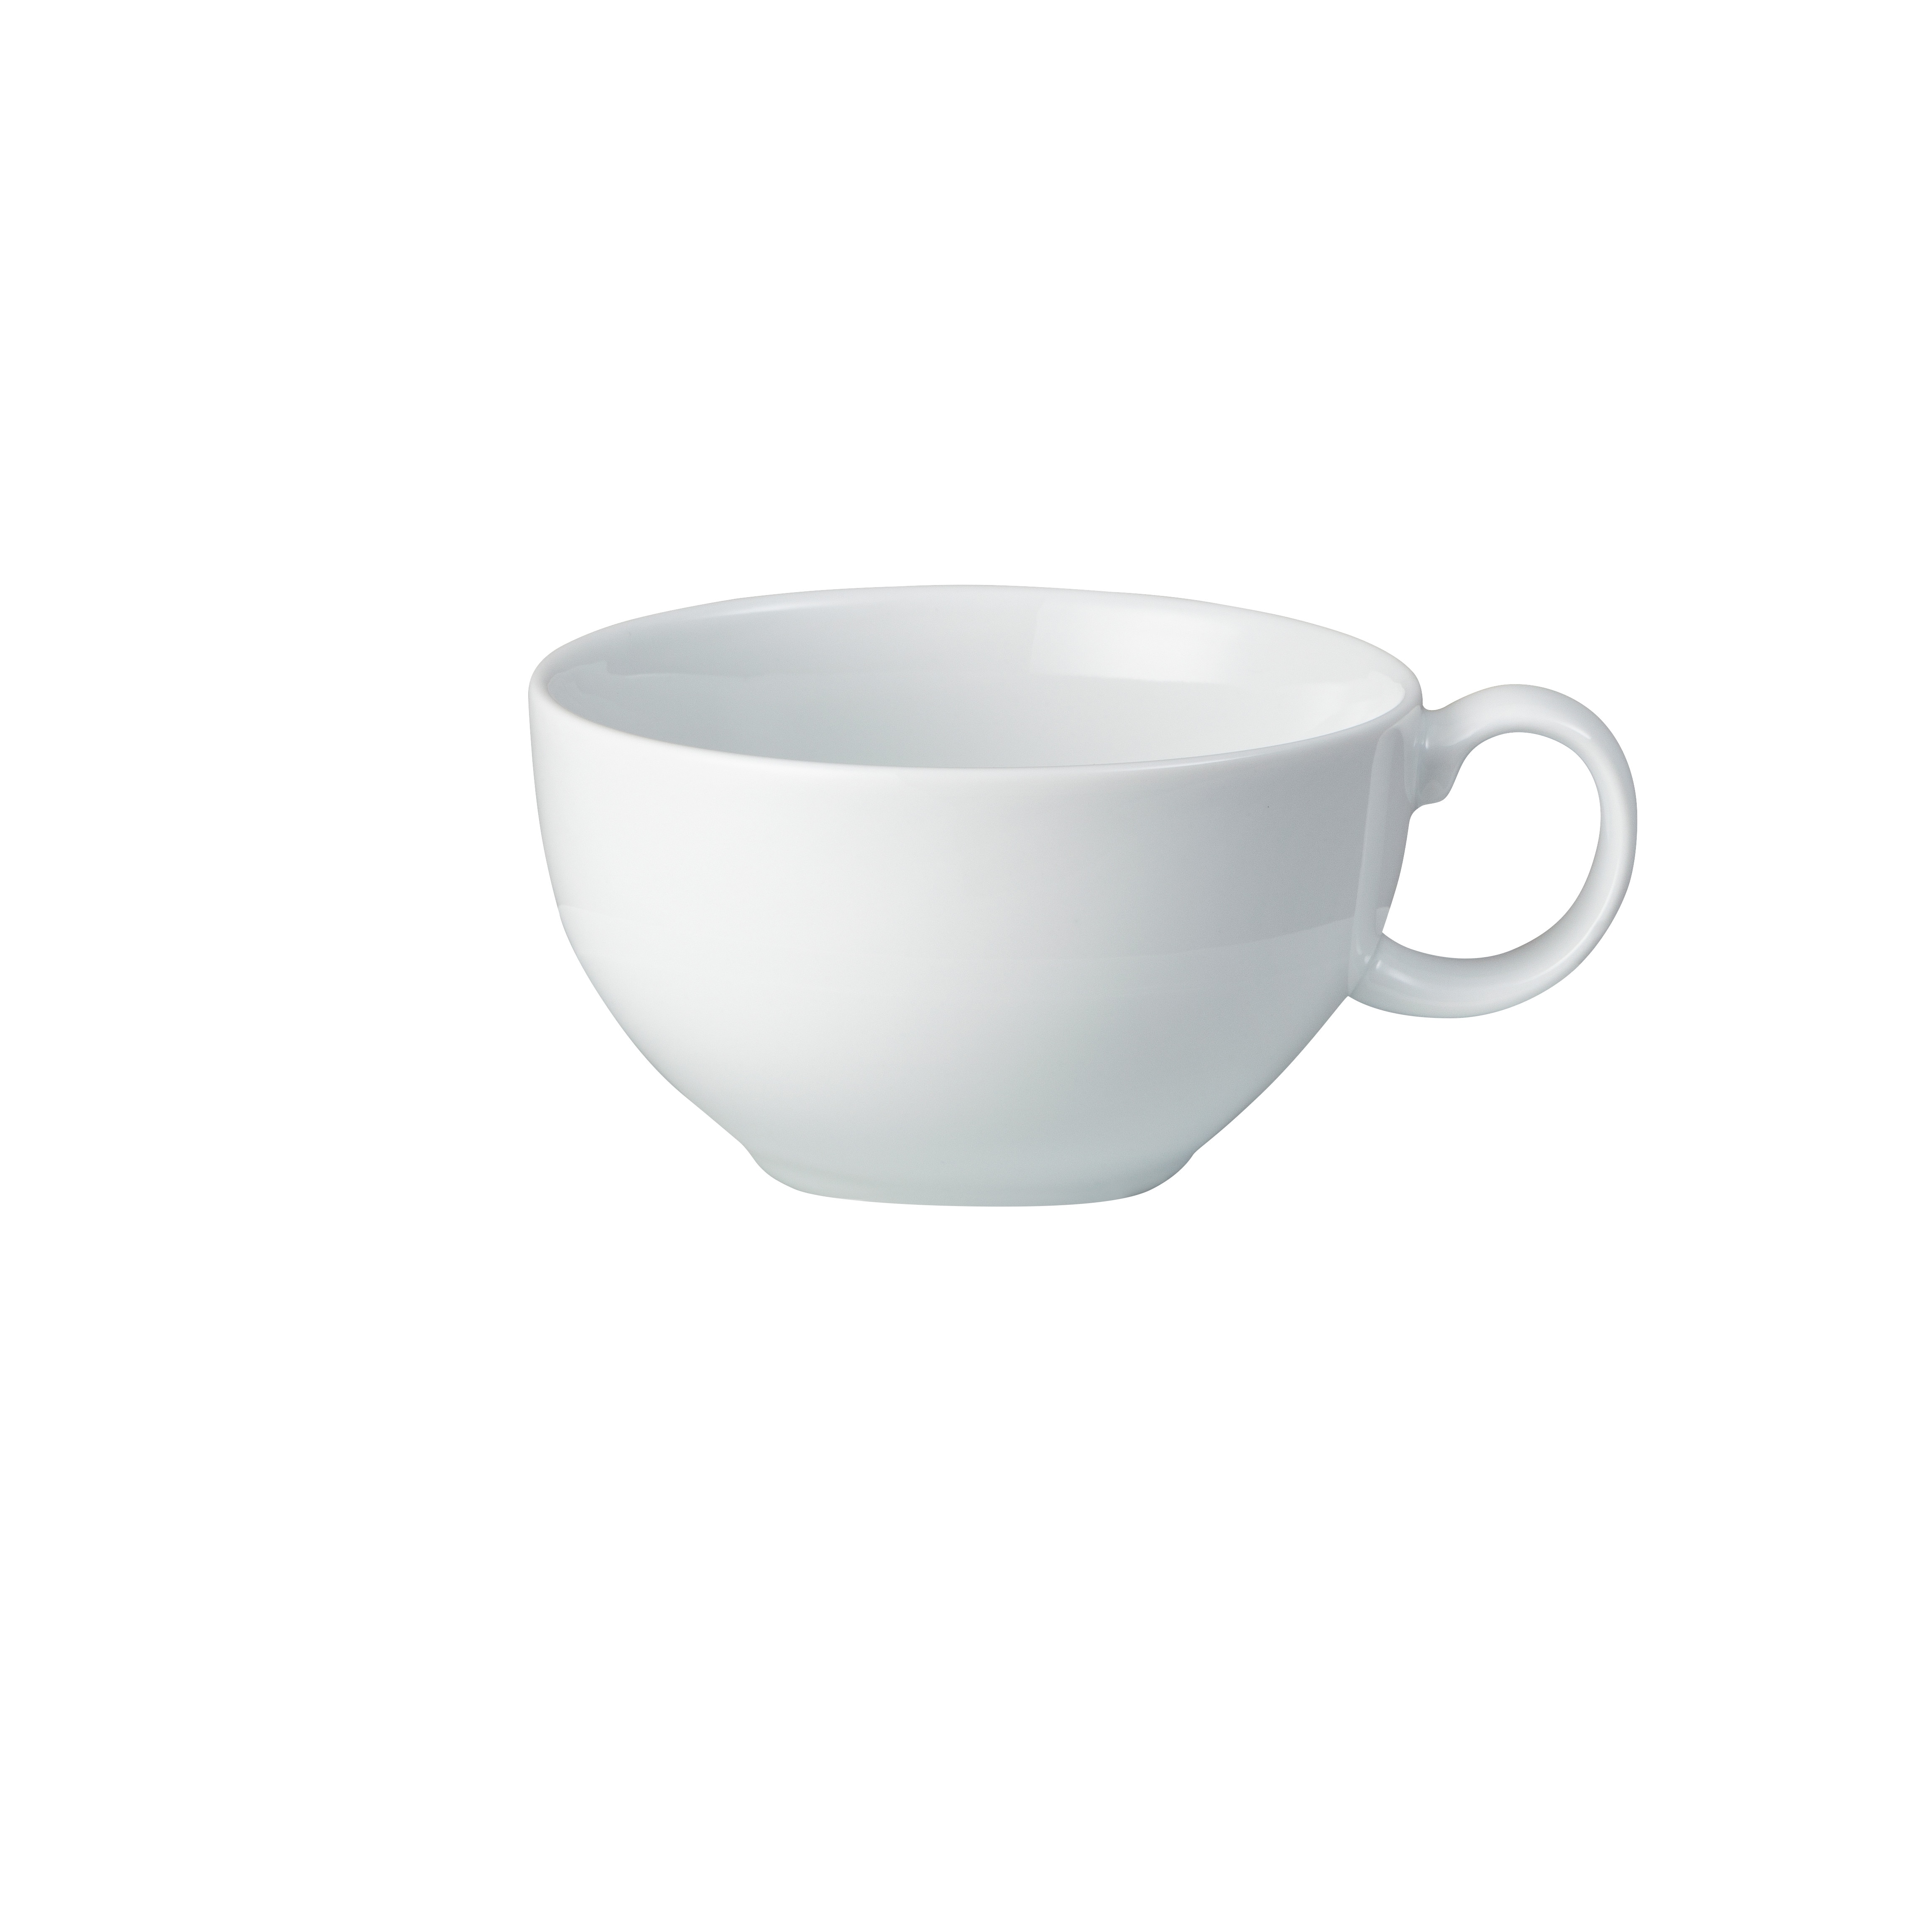 Denby White Porcelain Teacup